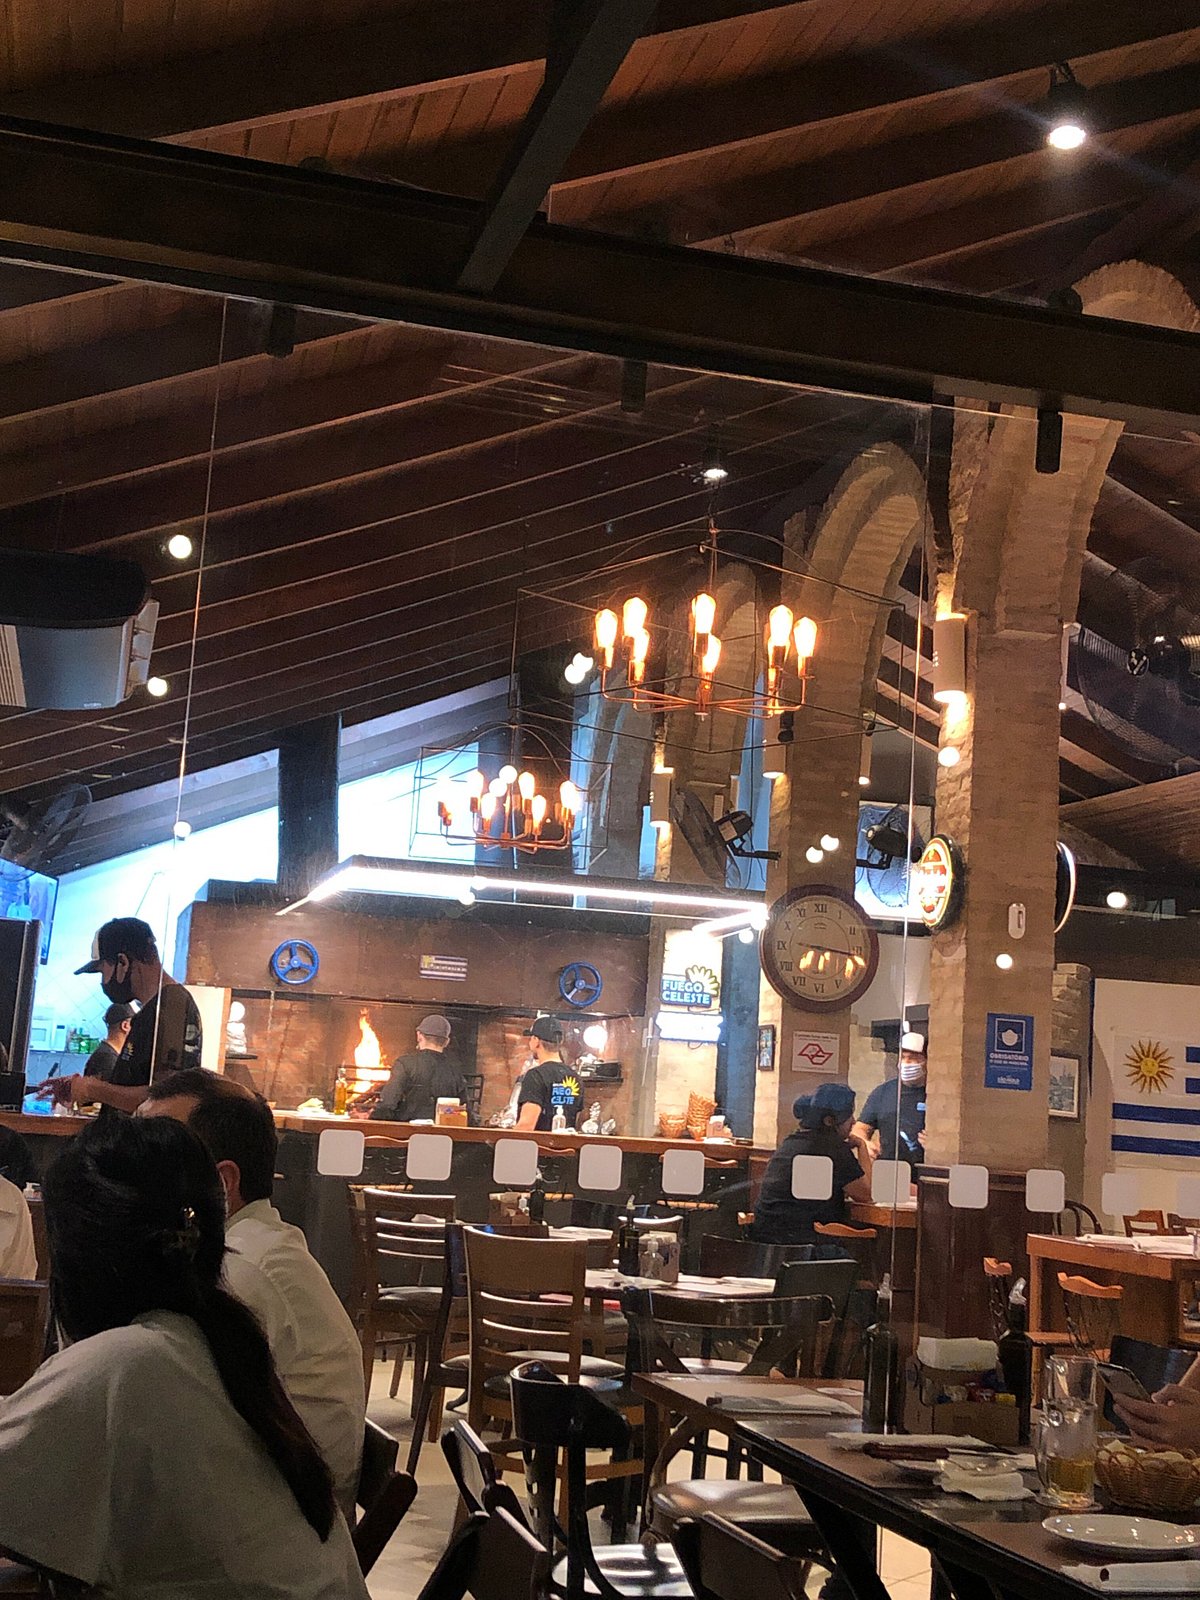 The Best 10 Diners near Padaria Jesbell in São Paulo - SP - Yelp